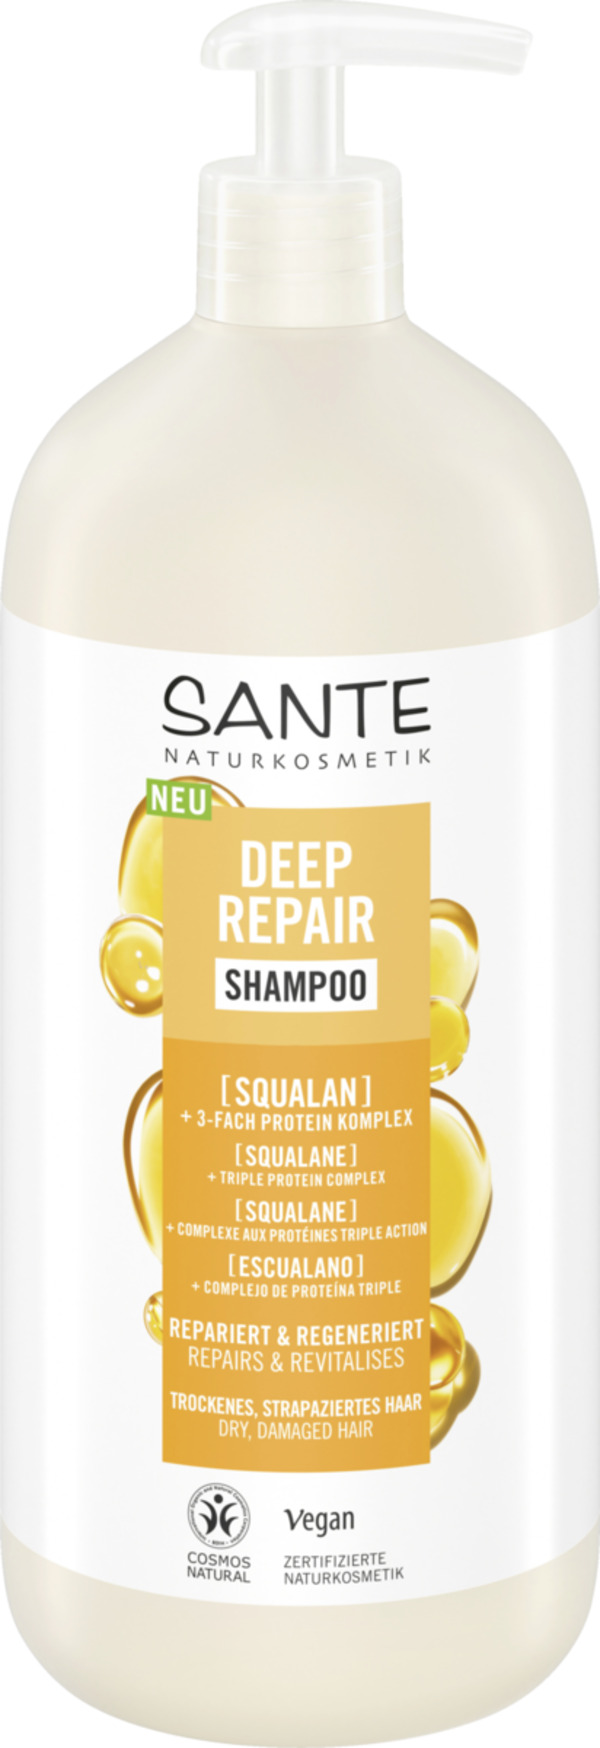 Bild 1 von Sante Deep Repair Shampoo